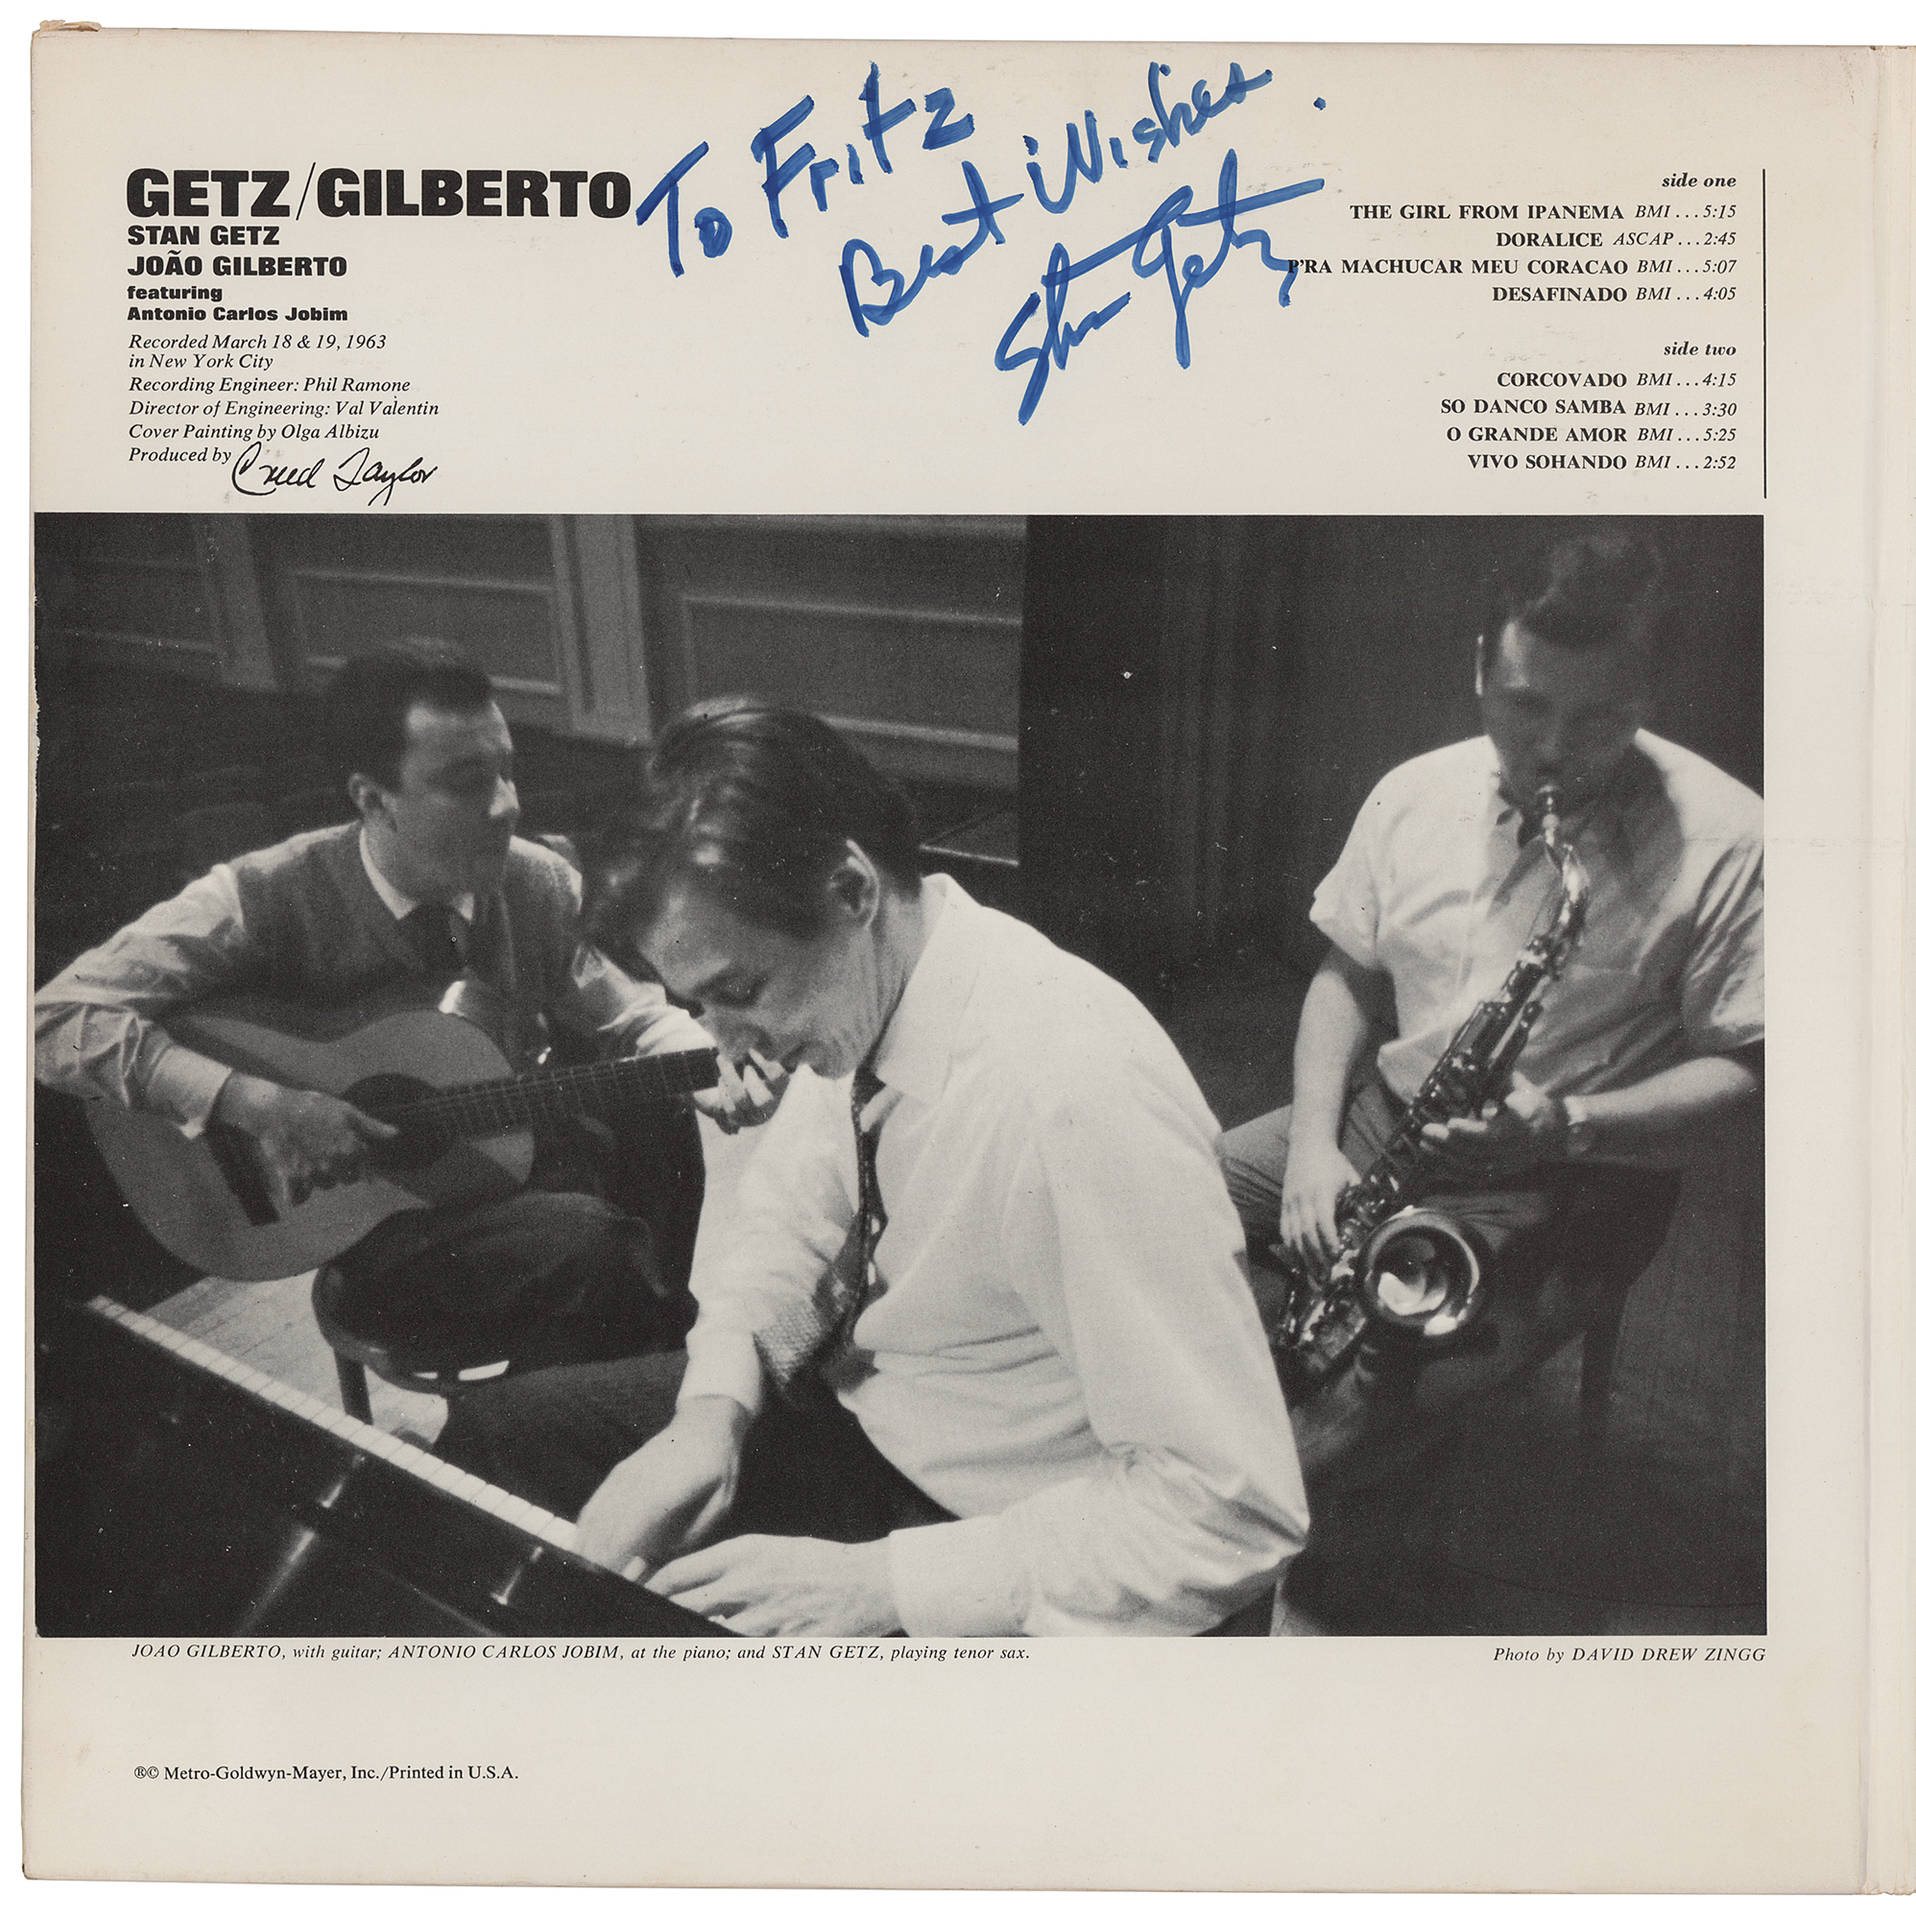 "Stan Getz&Joao Gilberto Signed Album Cover" Wallpaper